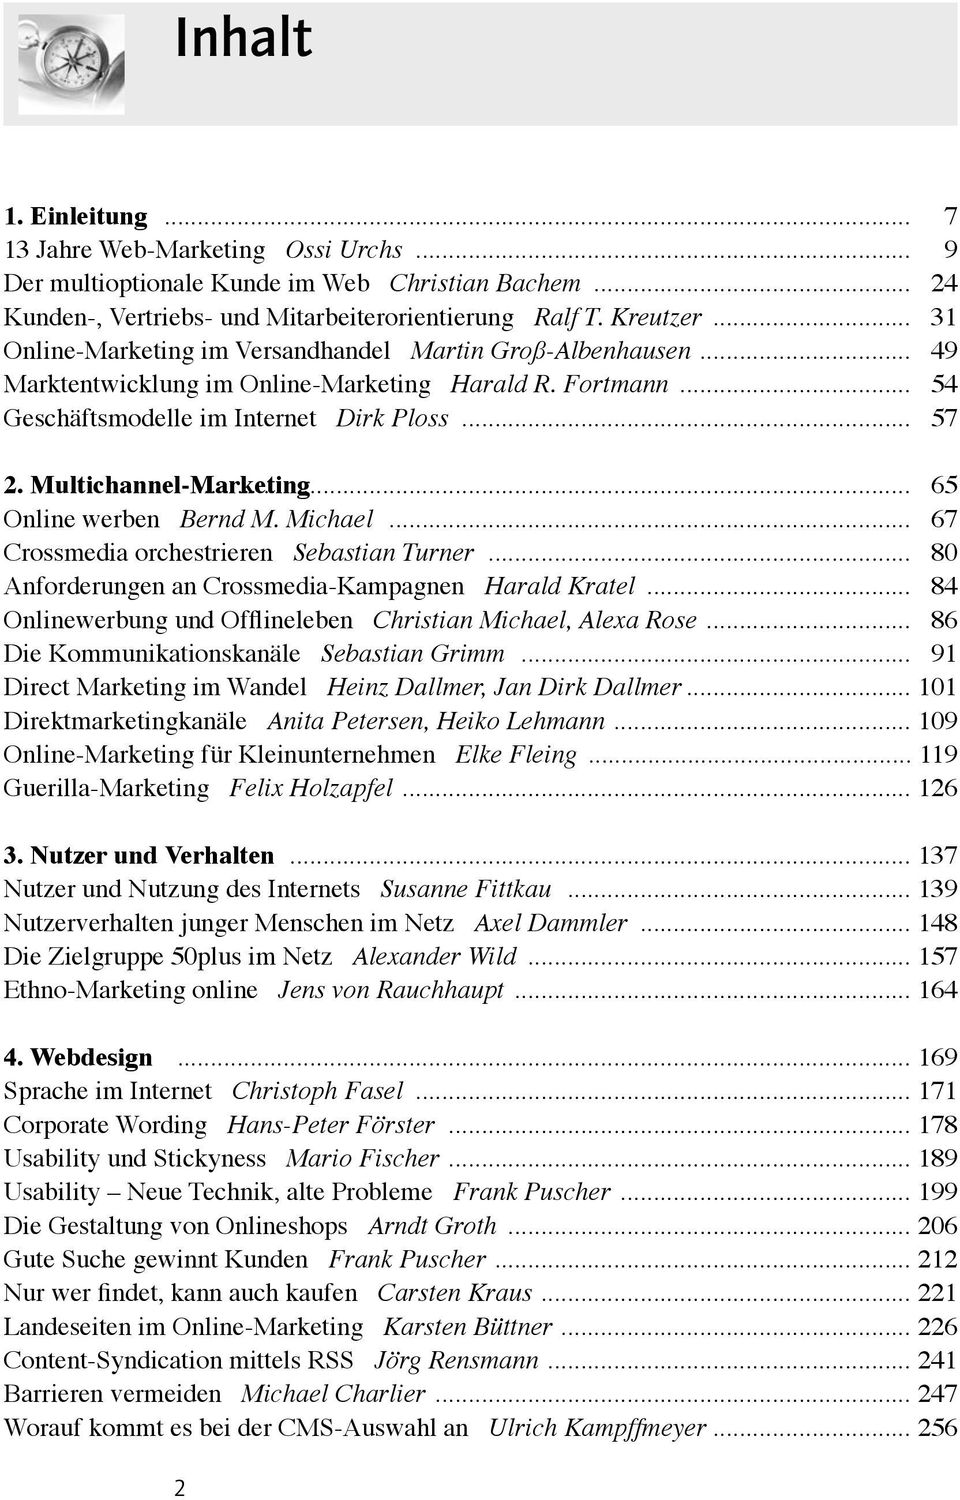 Multichannel-Marketing... 65 Online werben Bernd M. Michael... 67 Crossmedia orchestrieren Sebastian Turner... 80 Anforderungen an Crossmedia-Kampagnen Harald Kratel.